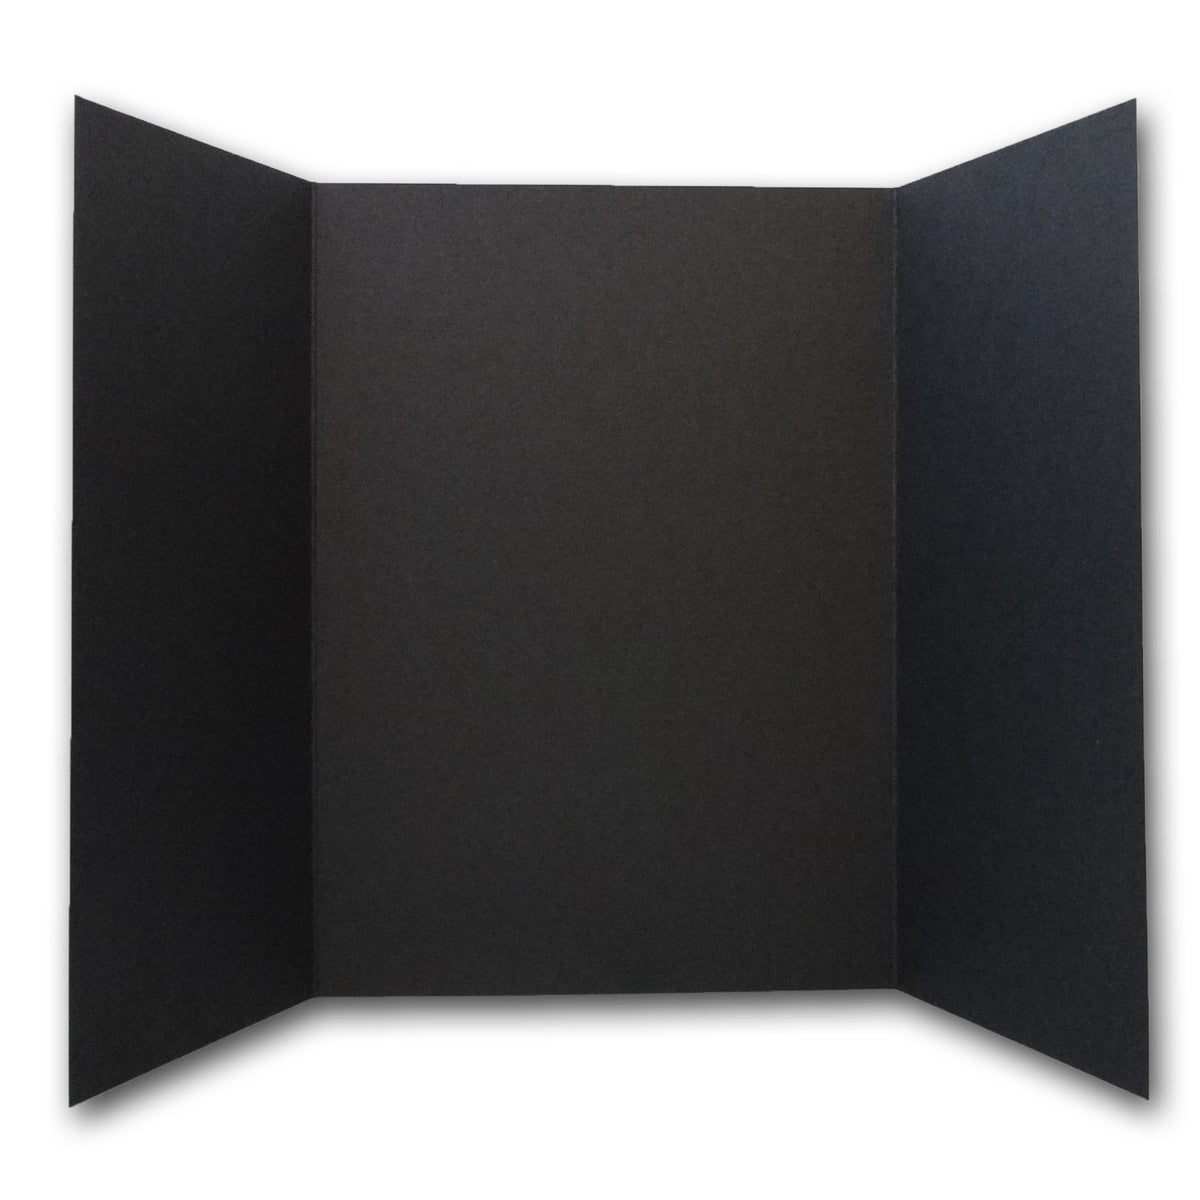 Black 5x7 Gate Fold Discount Card Stock for DIY Invitations